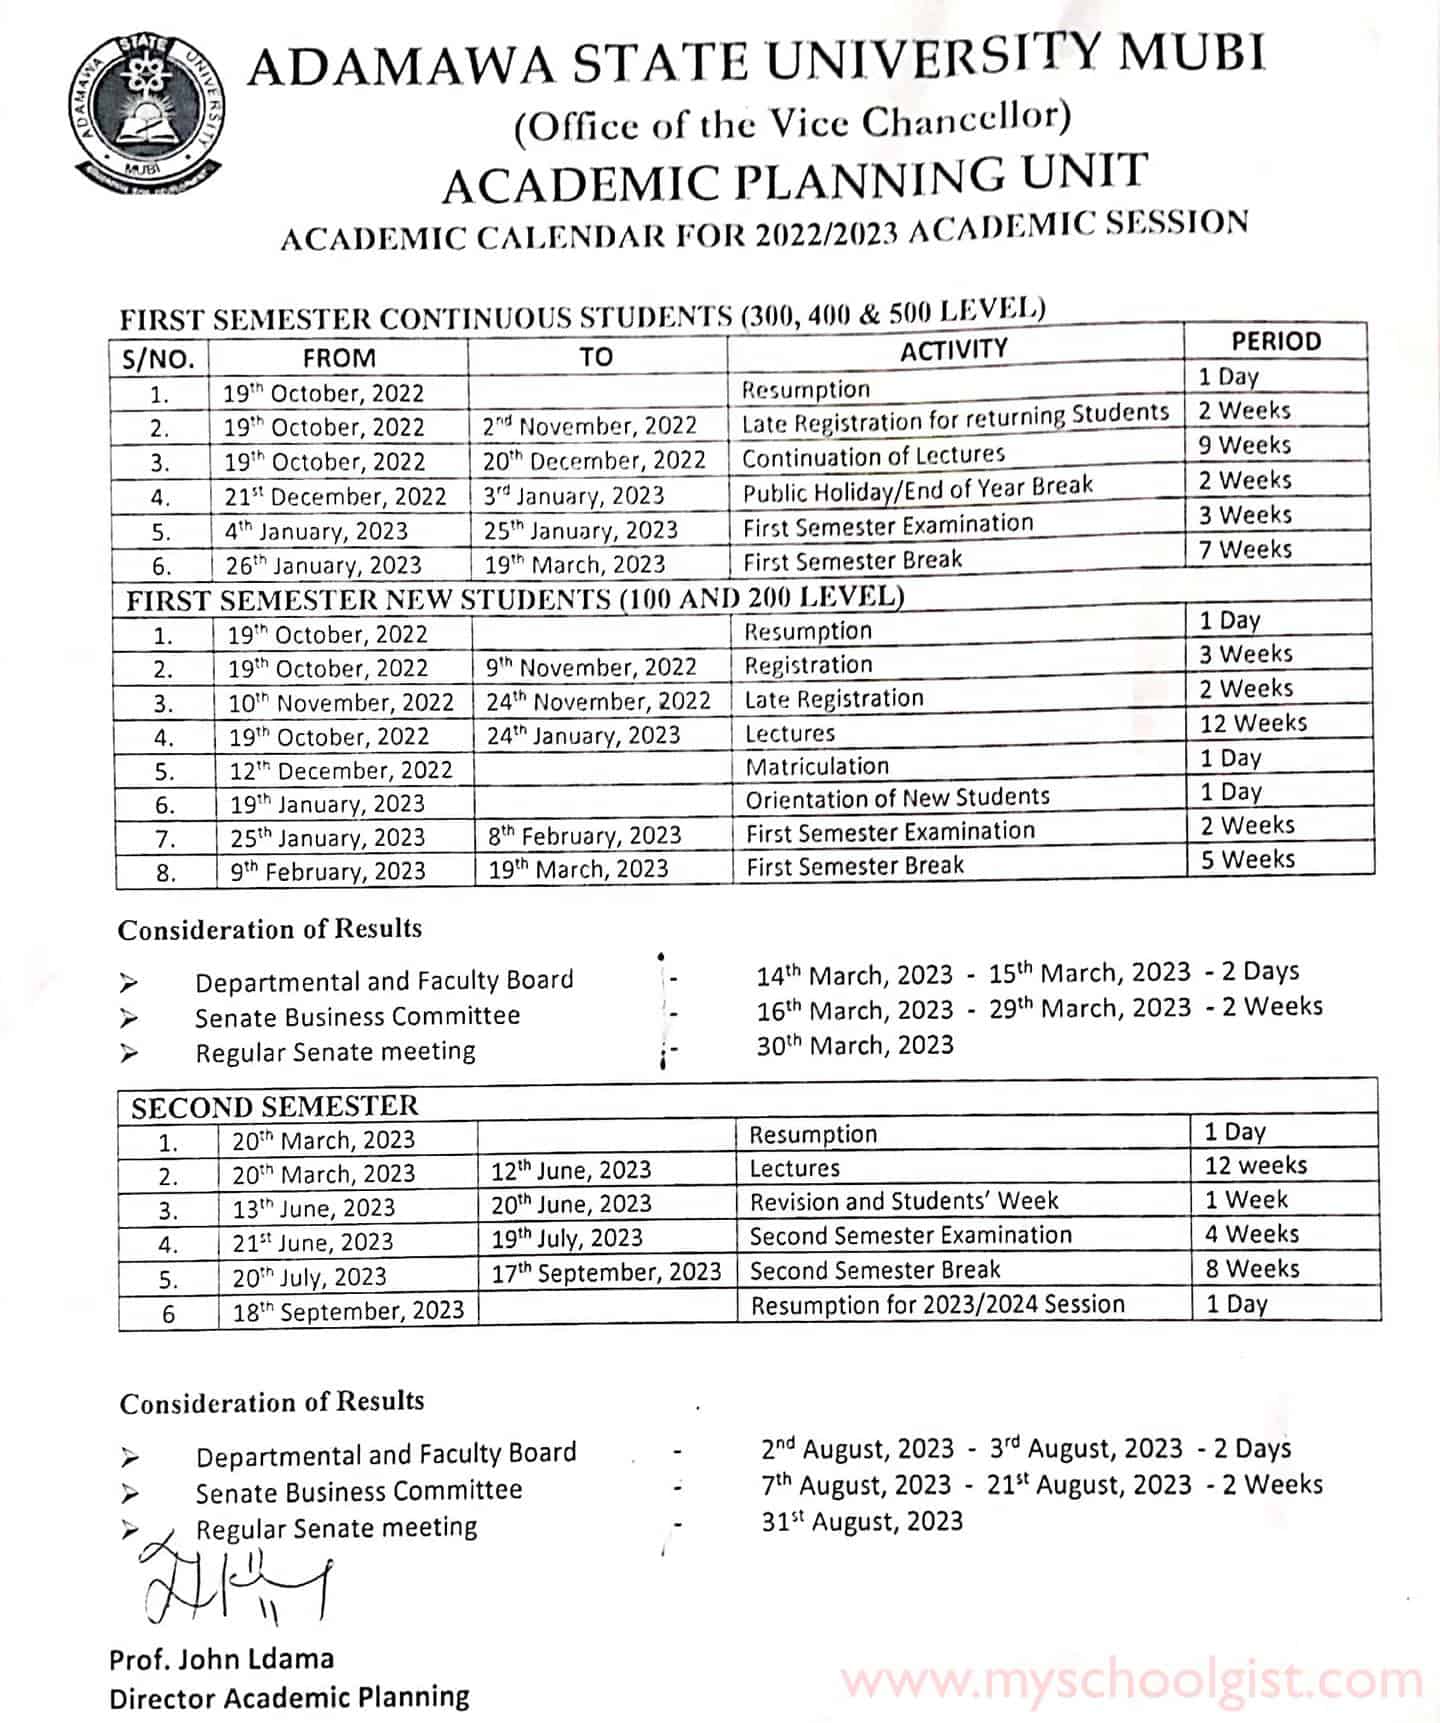 Adamawa State University (ADSU) Academic Calendar for 2022:2023 Academic Session